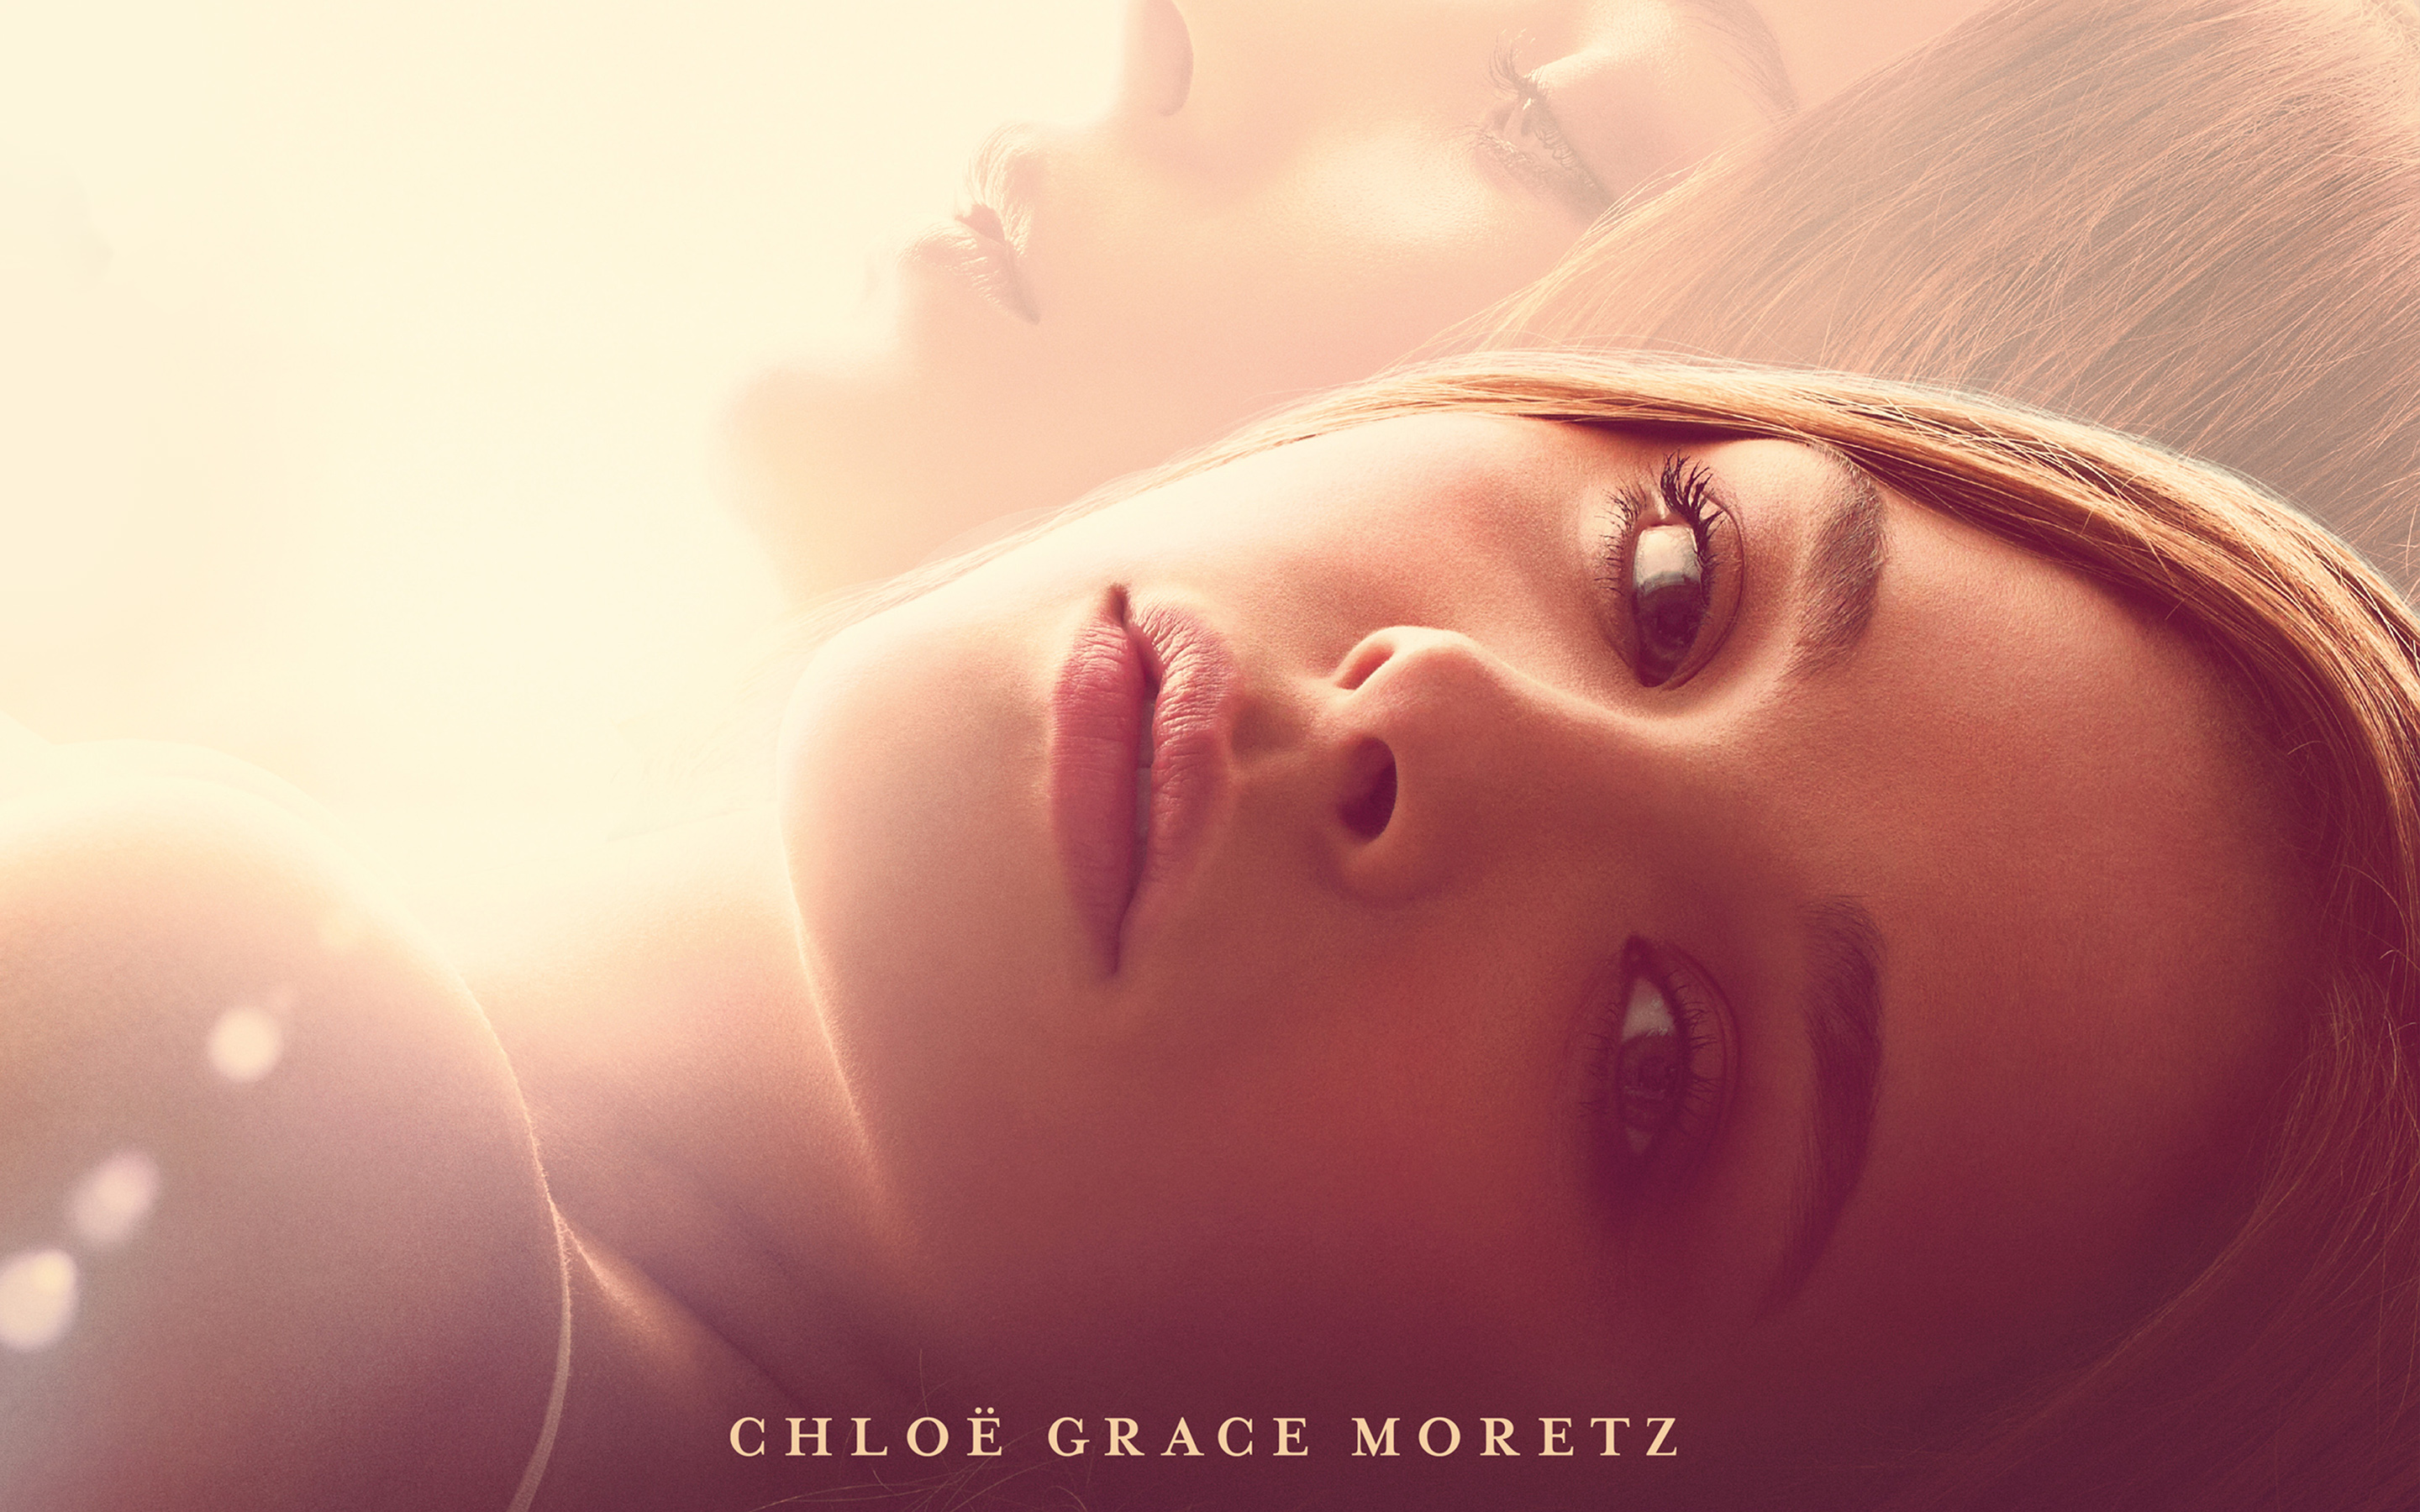 Download wallpaper Chloë Grace Moretz, Chloe Grace Moretz, The